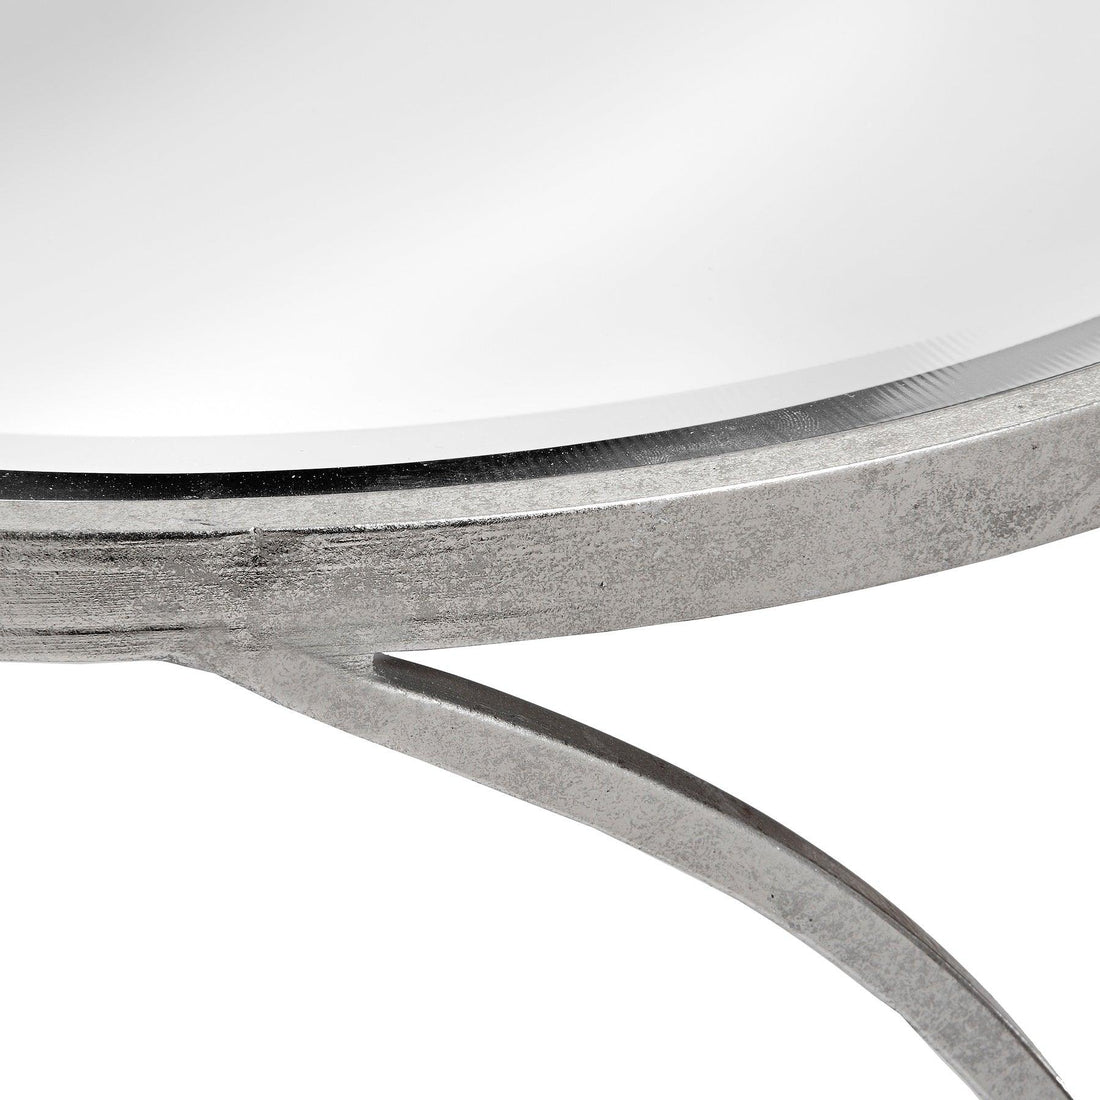 Silver Curved Design Set Of 2 Side Tables - £264.95 - Furniture > Tables > Side Tables 